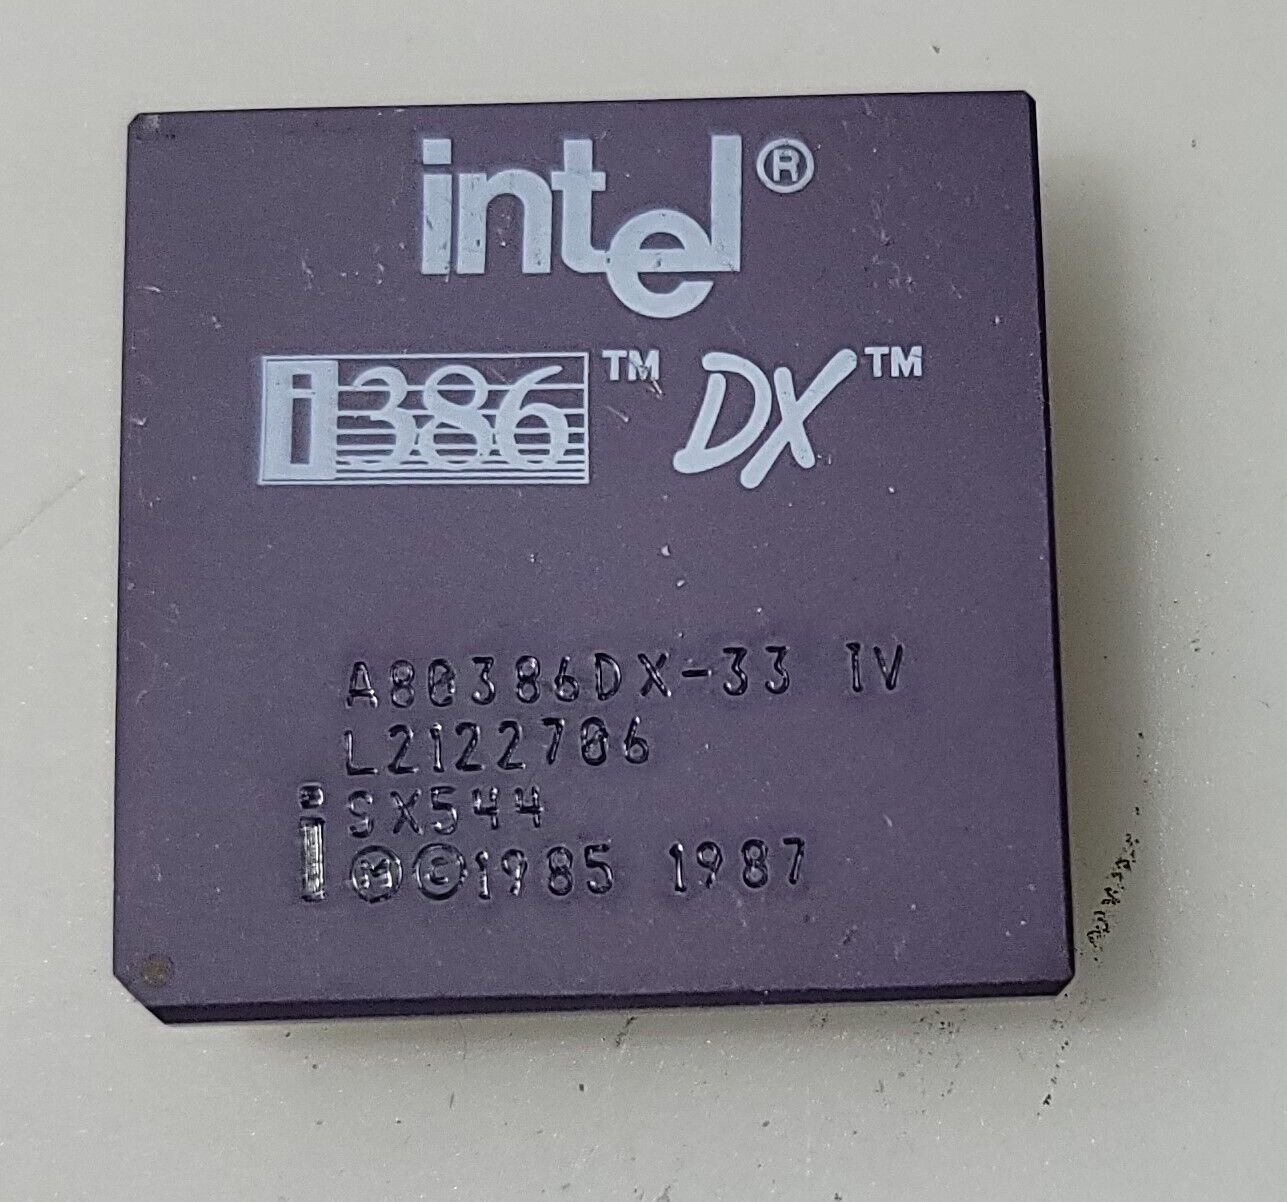 Vintage Rare Intel i386 DX A80386DX-33 IV SX544 Processor Collection/Gold